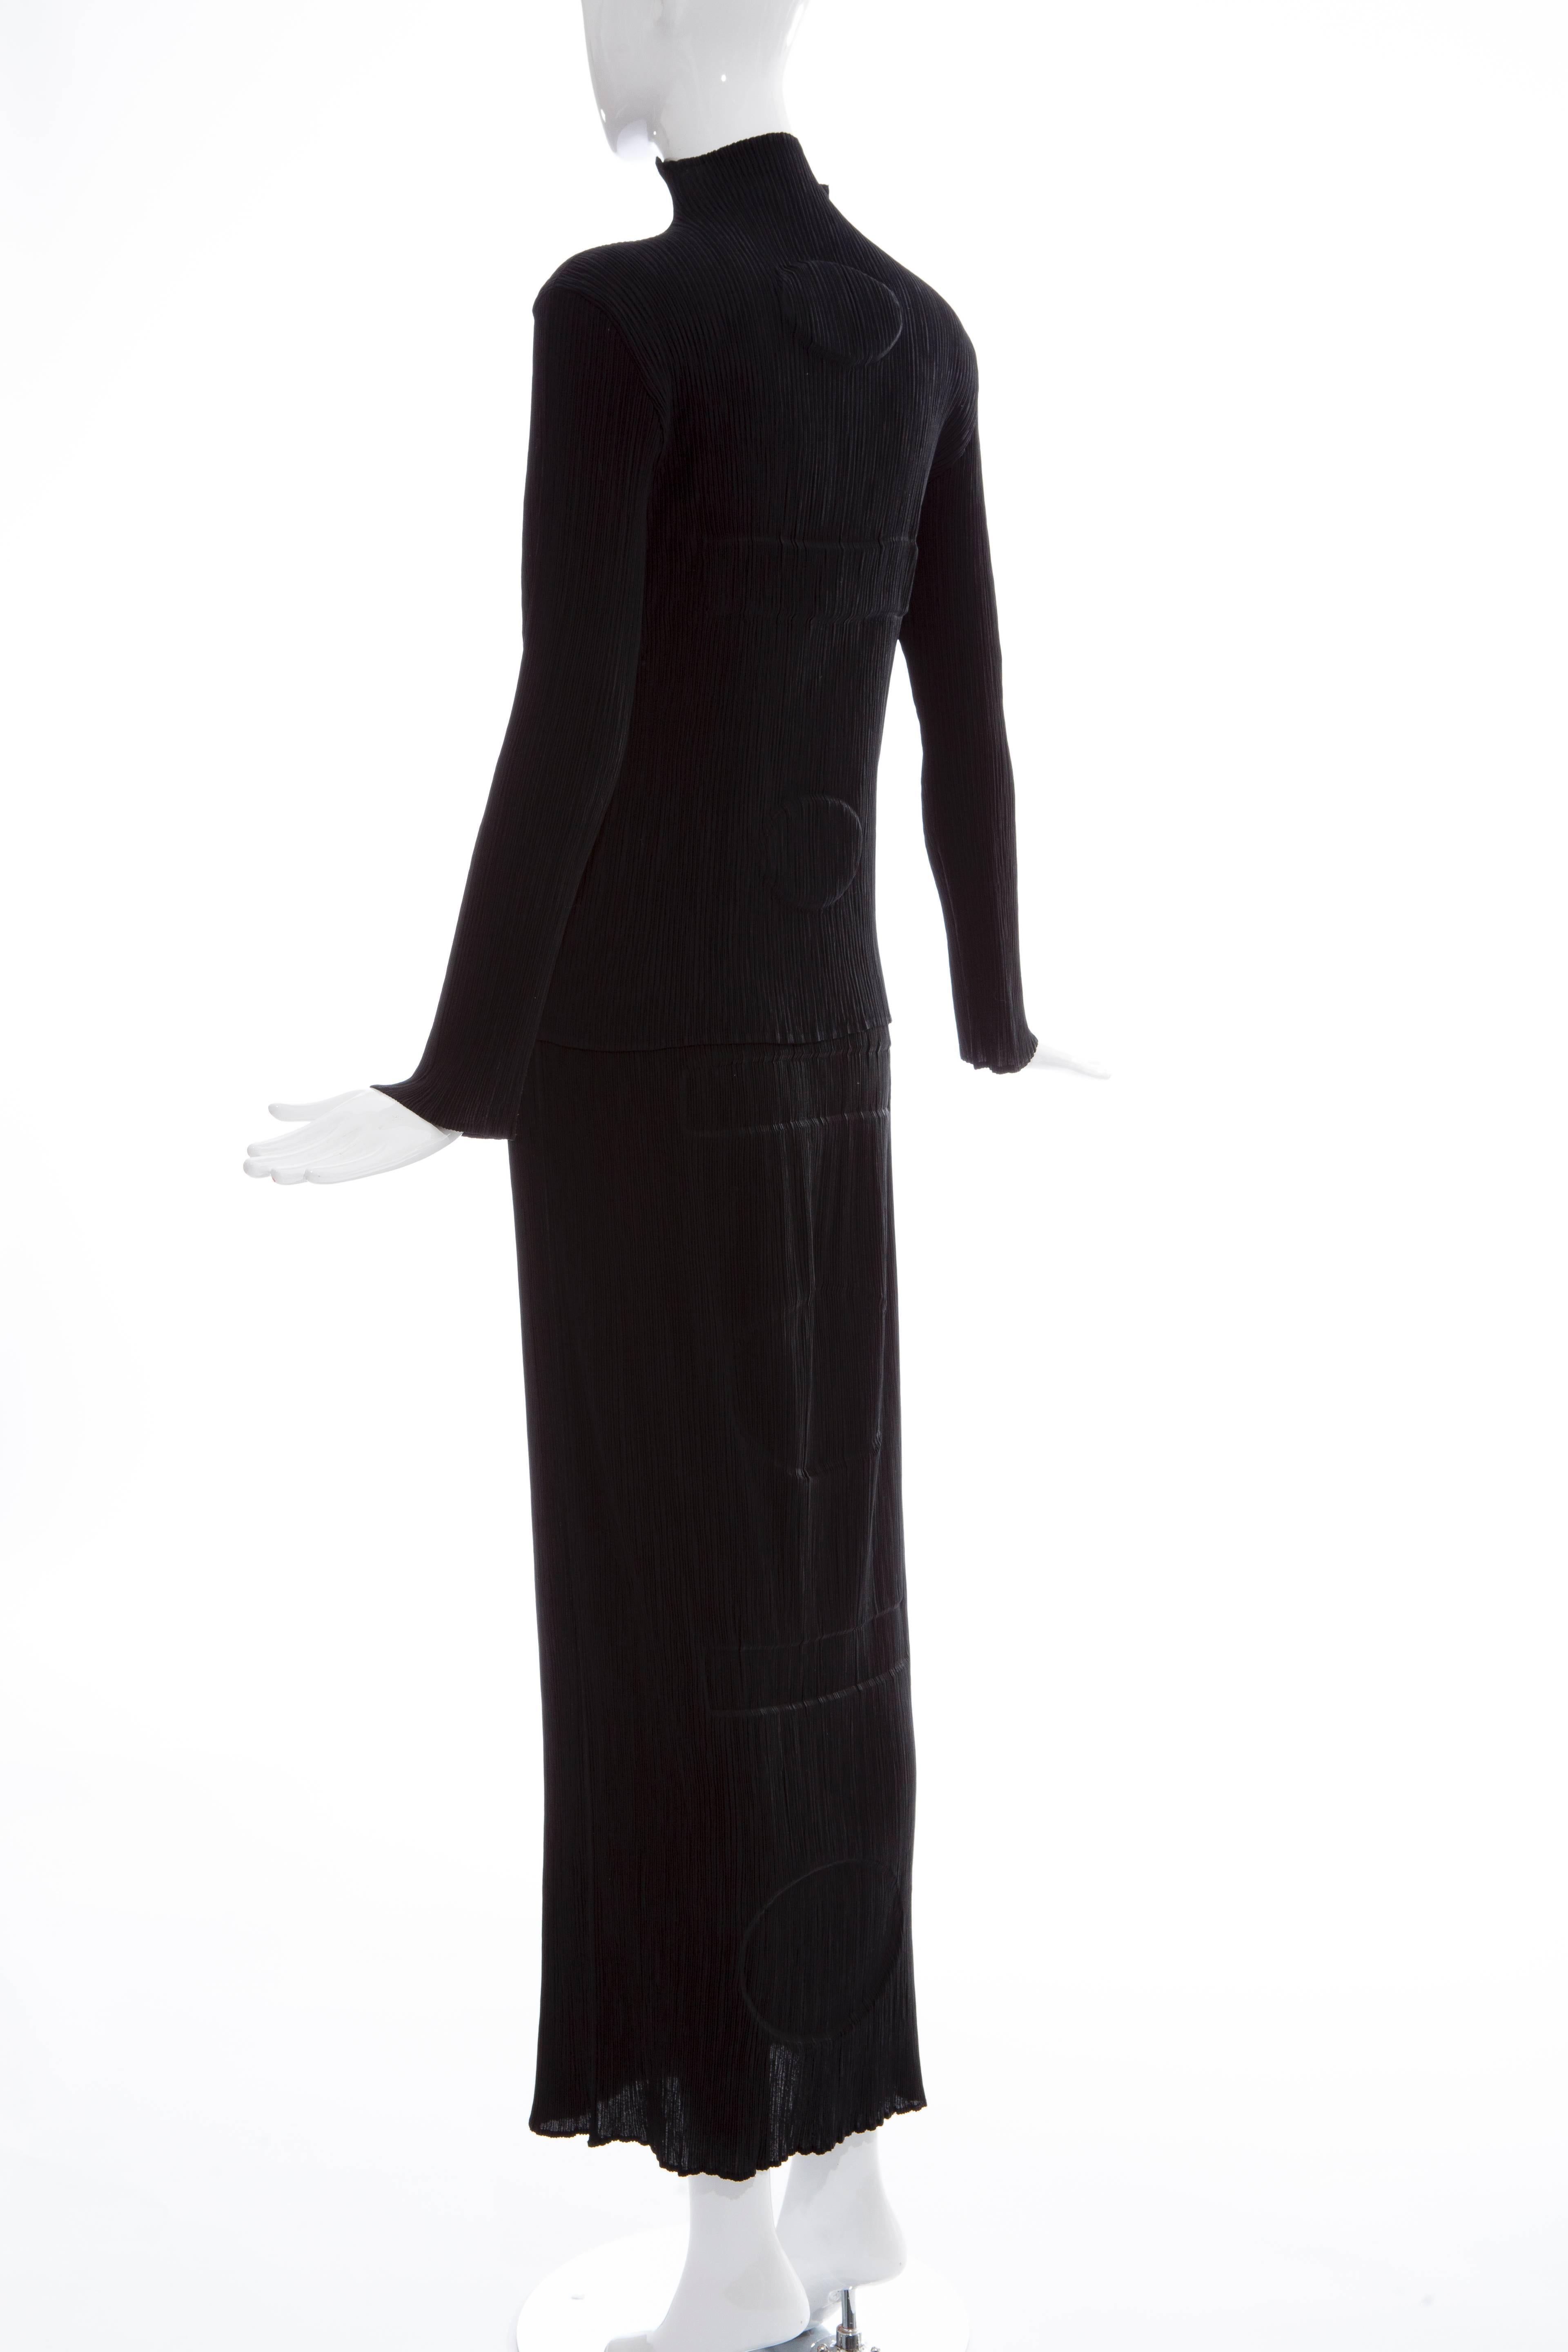 Issey Miyake Black Micro Pleated Orb Skirt Suit, Circa 1990's 3